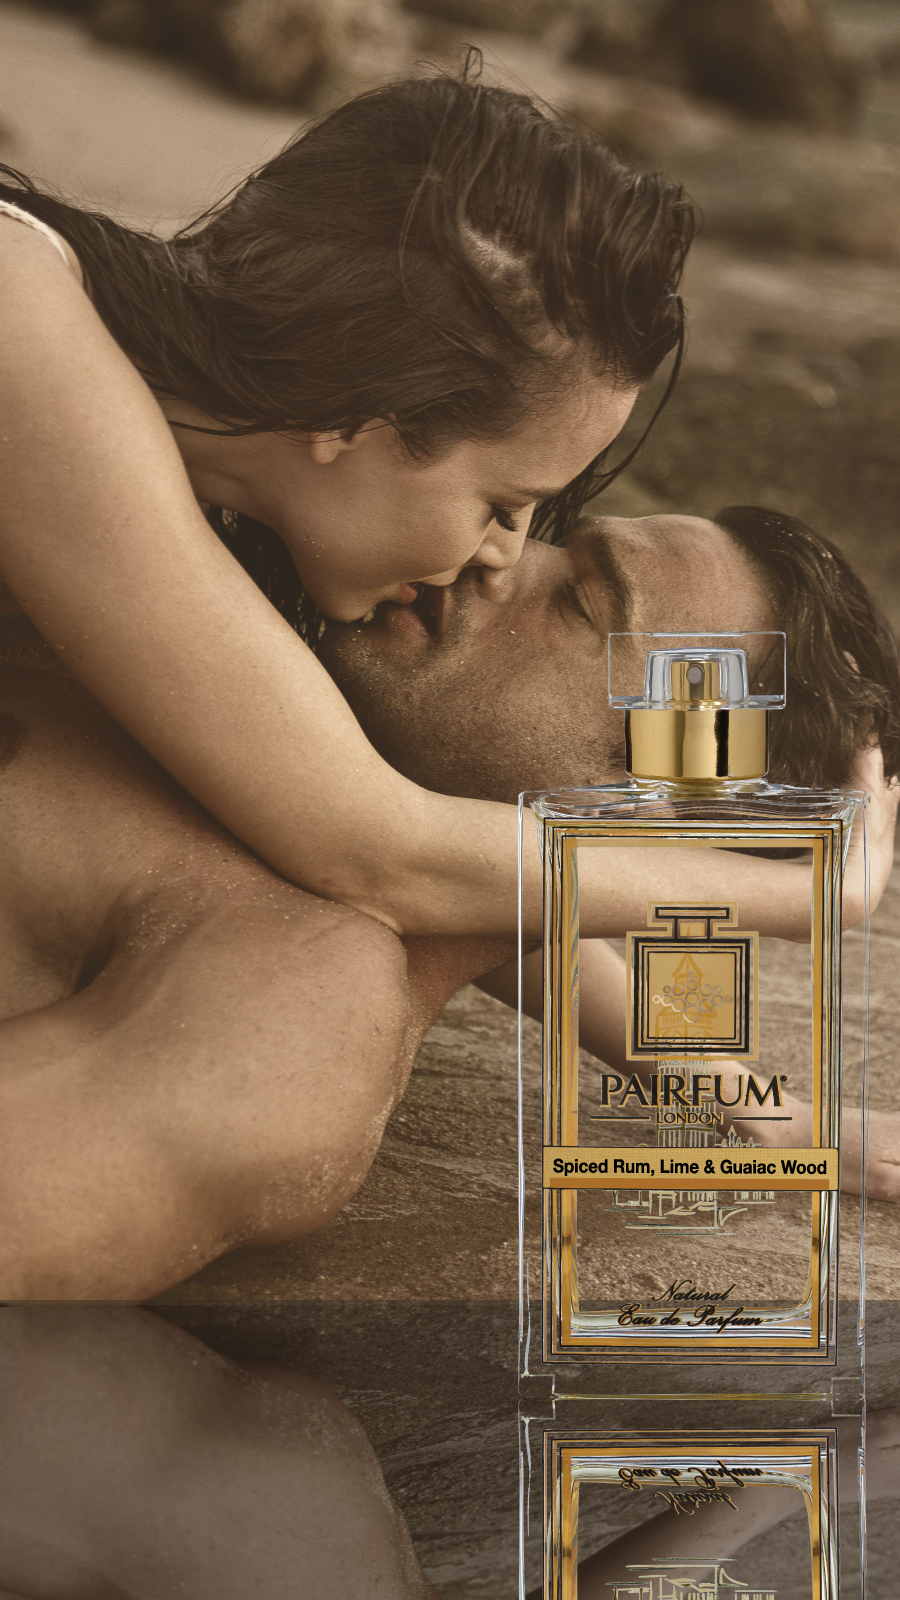 Incredible Daring Perfume Fragrance Body Oil Roll On (L) Ladies